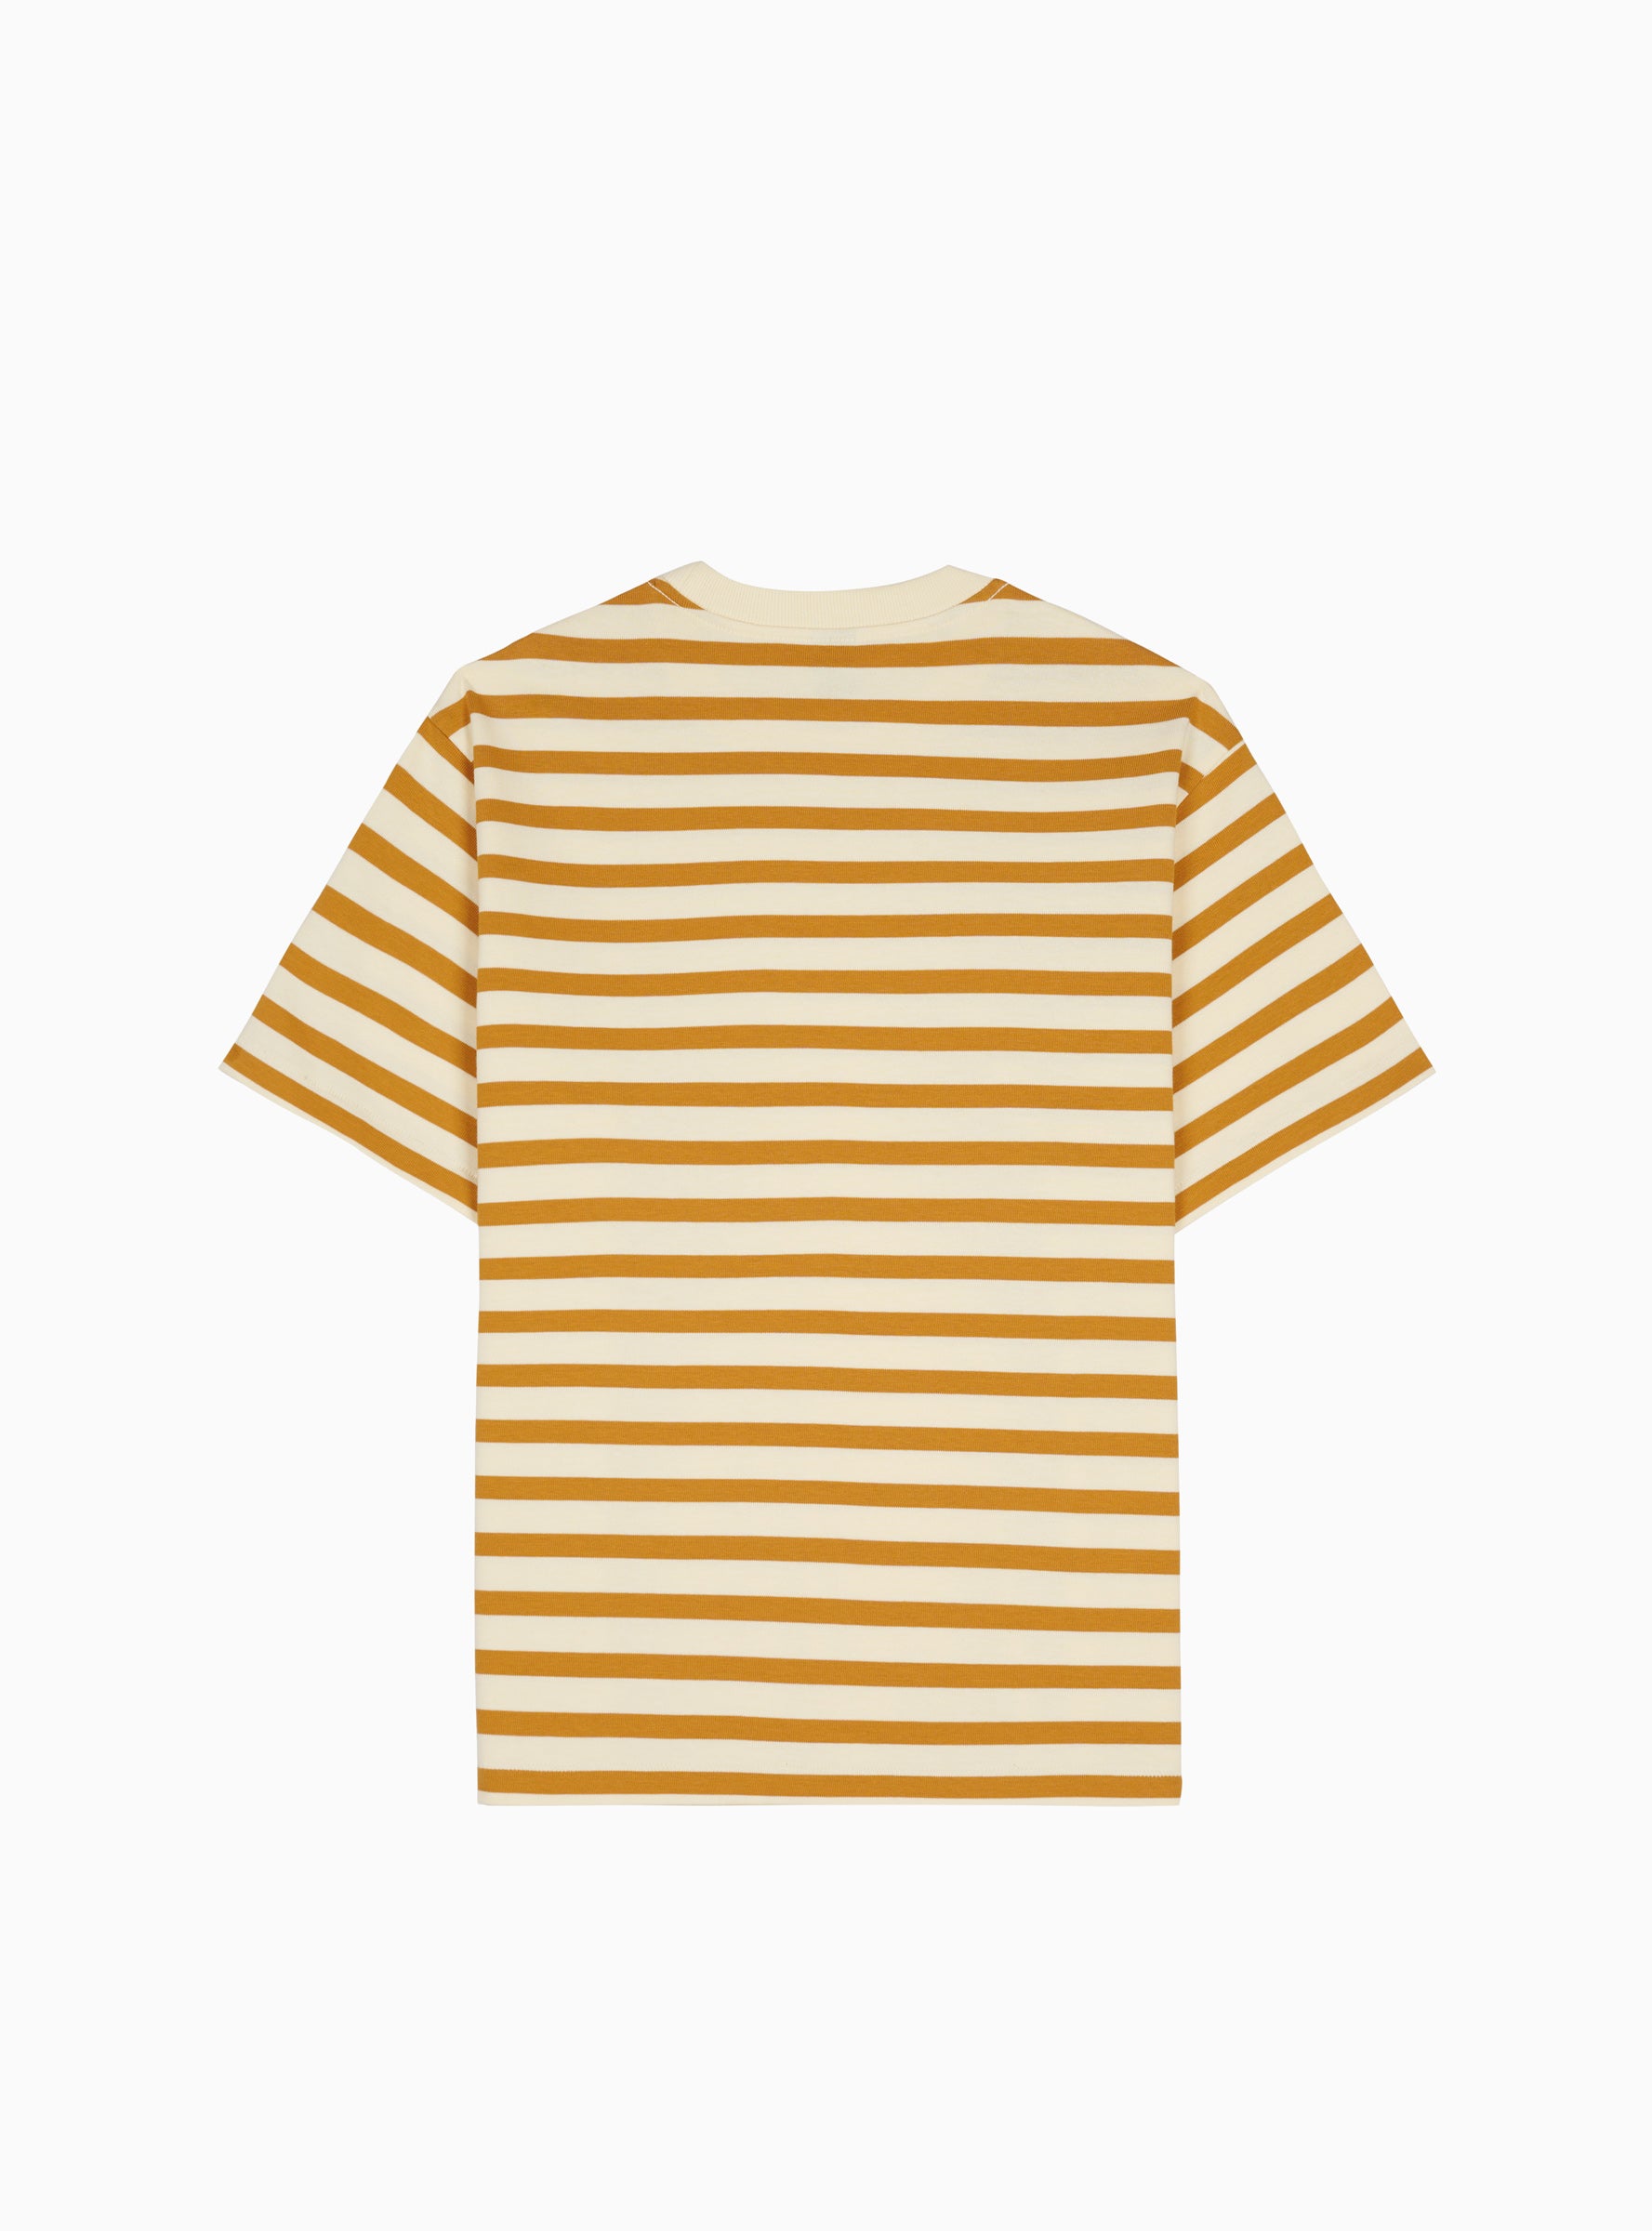 Brain Dead Brain Dead Organic T-shirt Gold & Ecru Stripe - Size: Medium